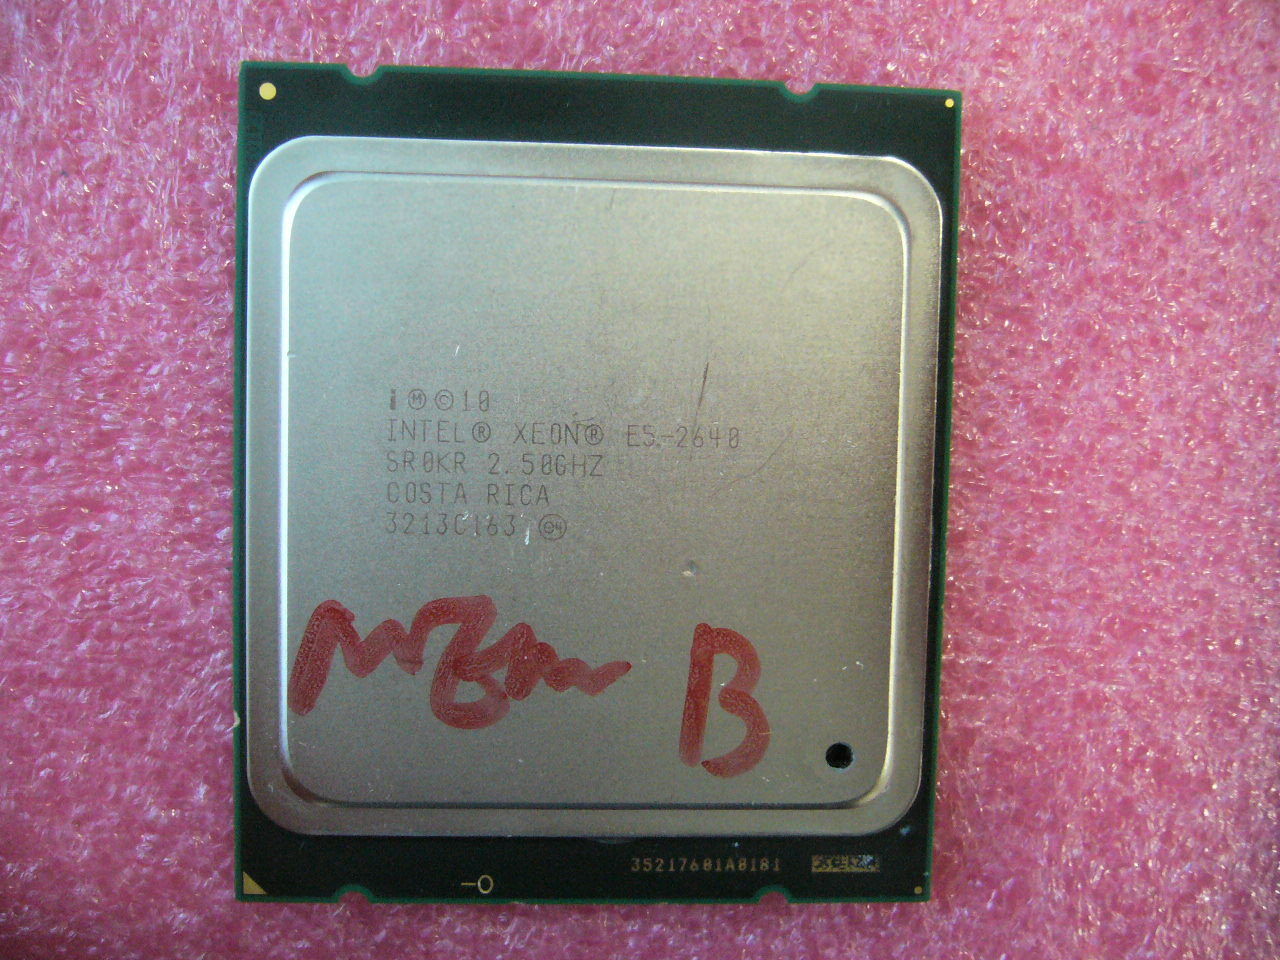 QTY 1x Intel CPU E5-2640 CPU 6-Cores 2.5Ghz LGA2011 SR0KR Mem Channel damaged